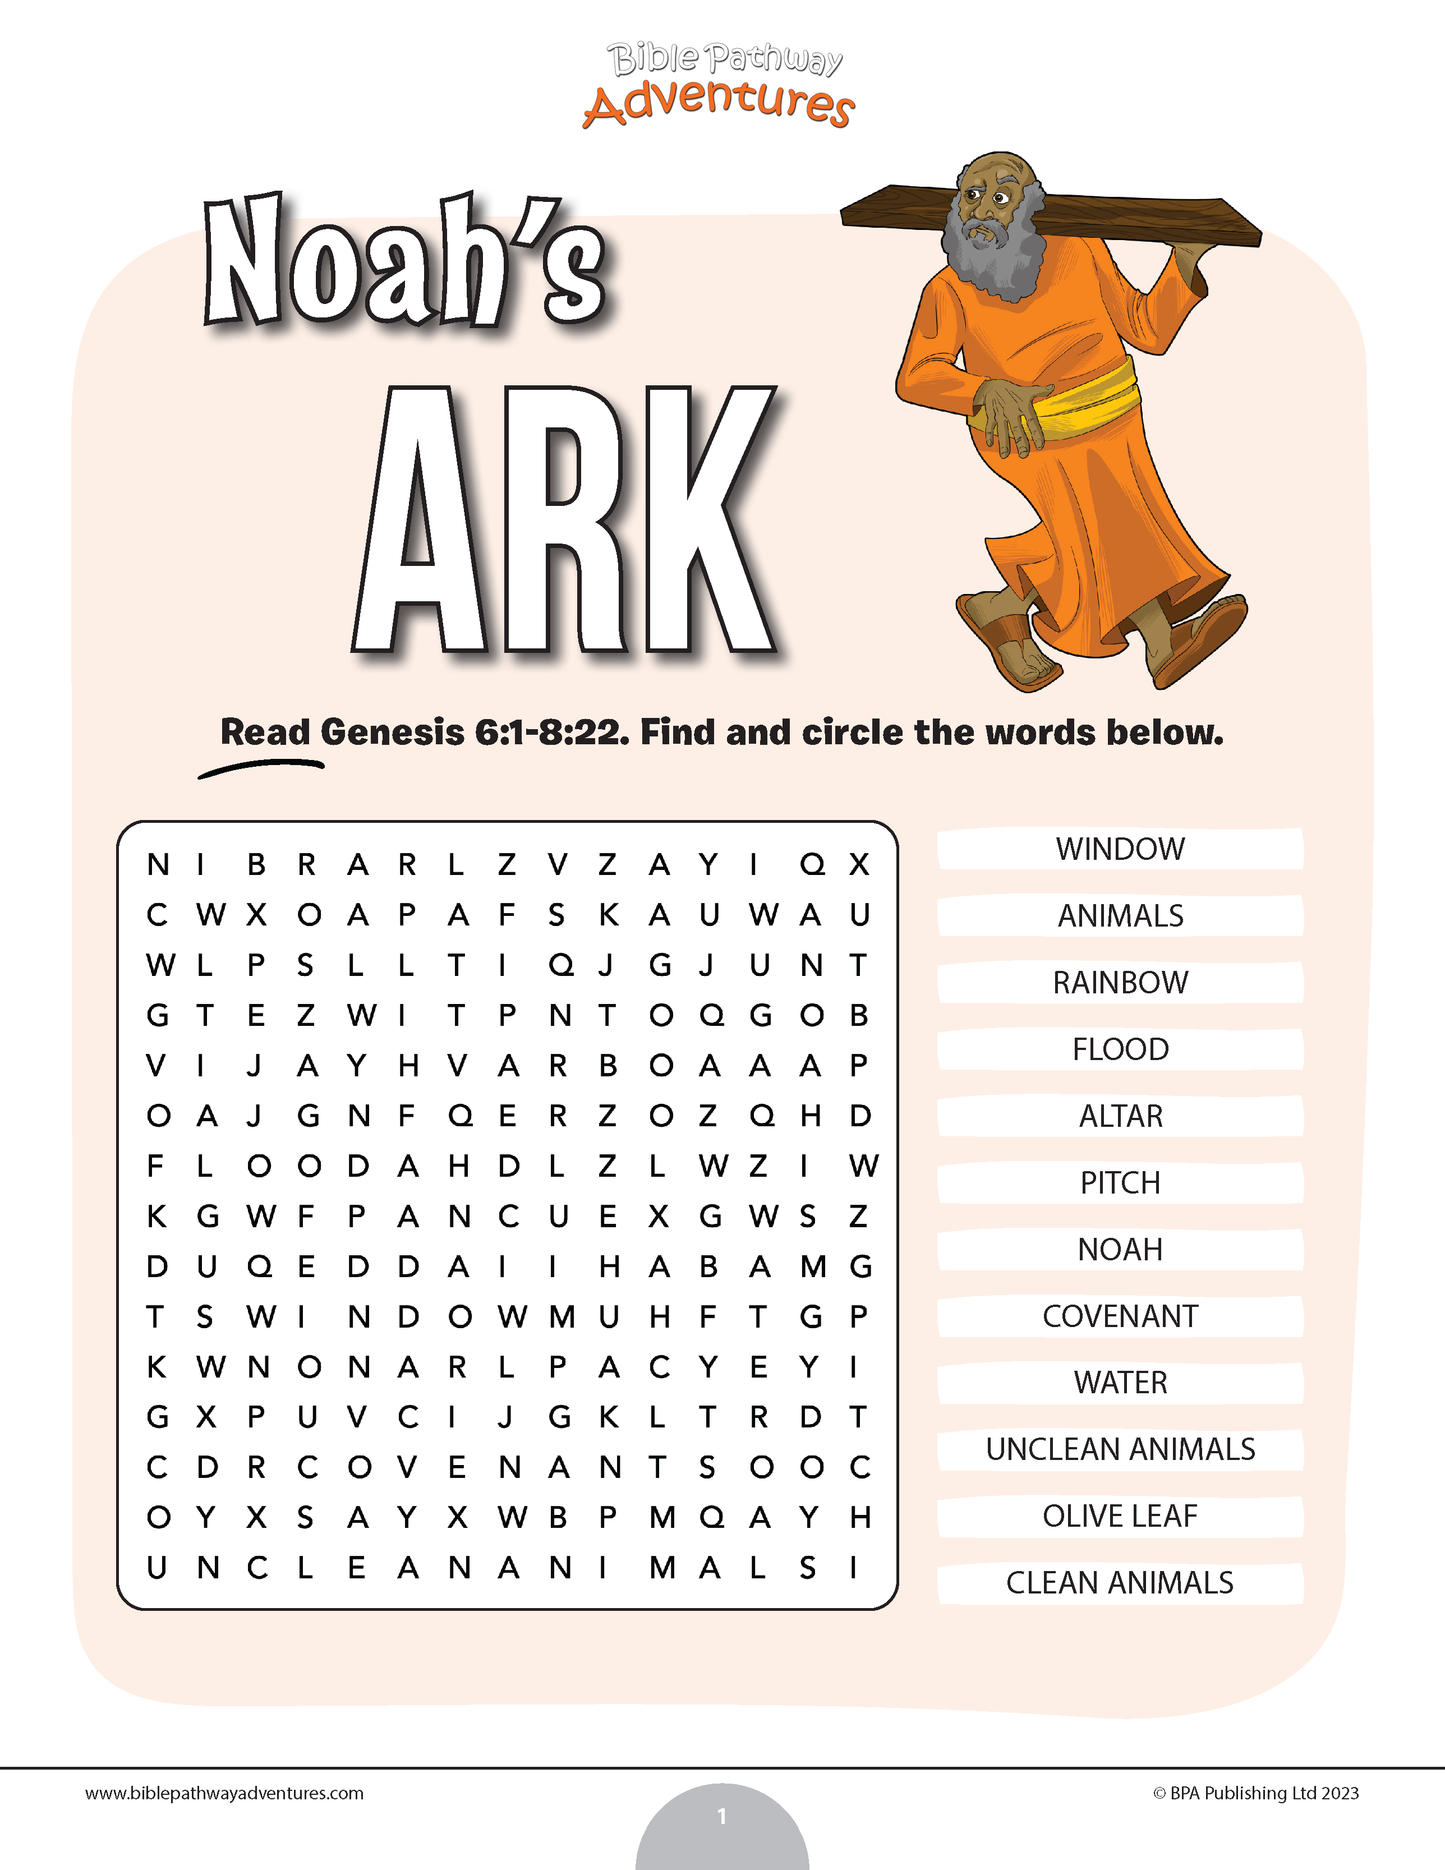 Noah’s Ark word search